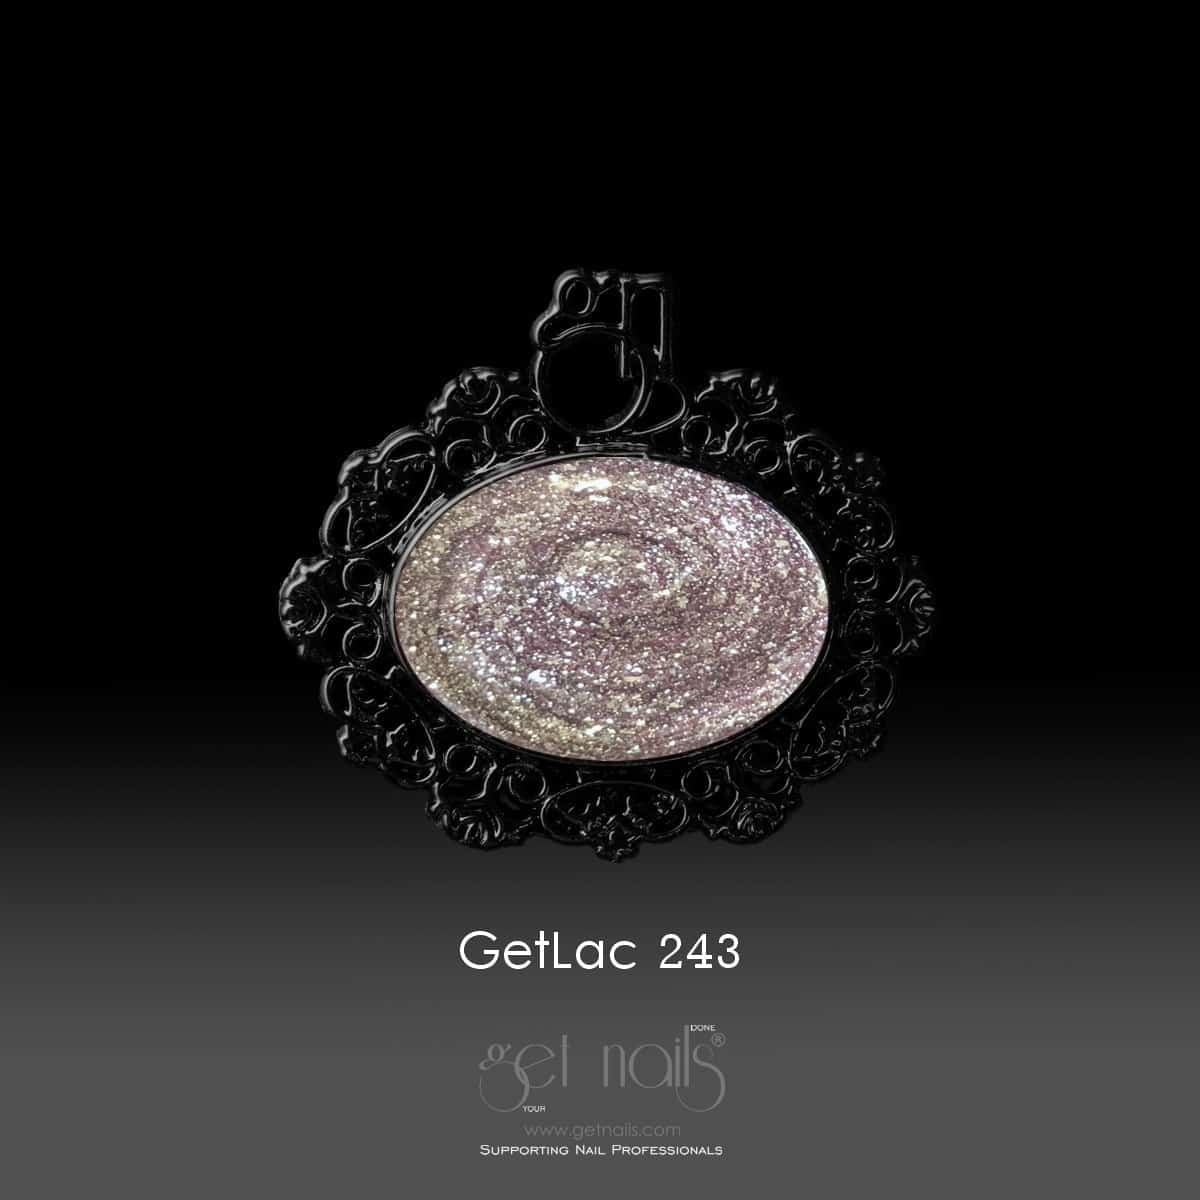 Get Nails Austria - GetLac 243 Brilliant Rose Gold 15g